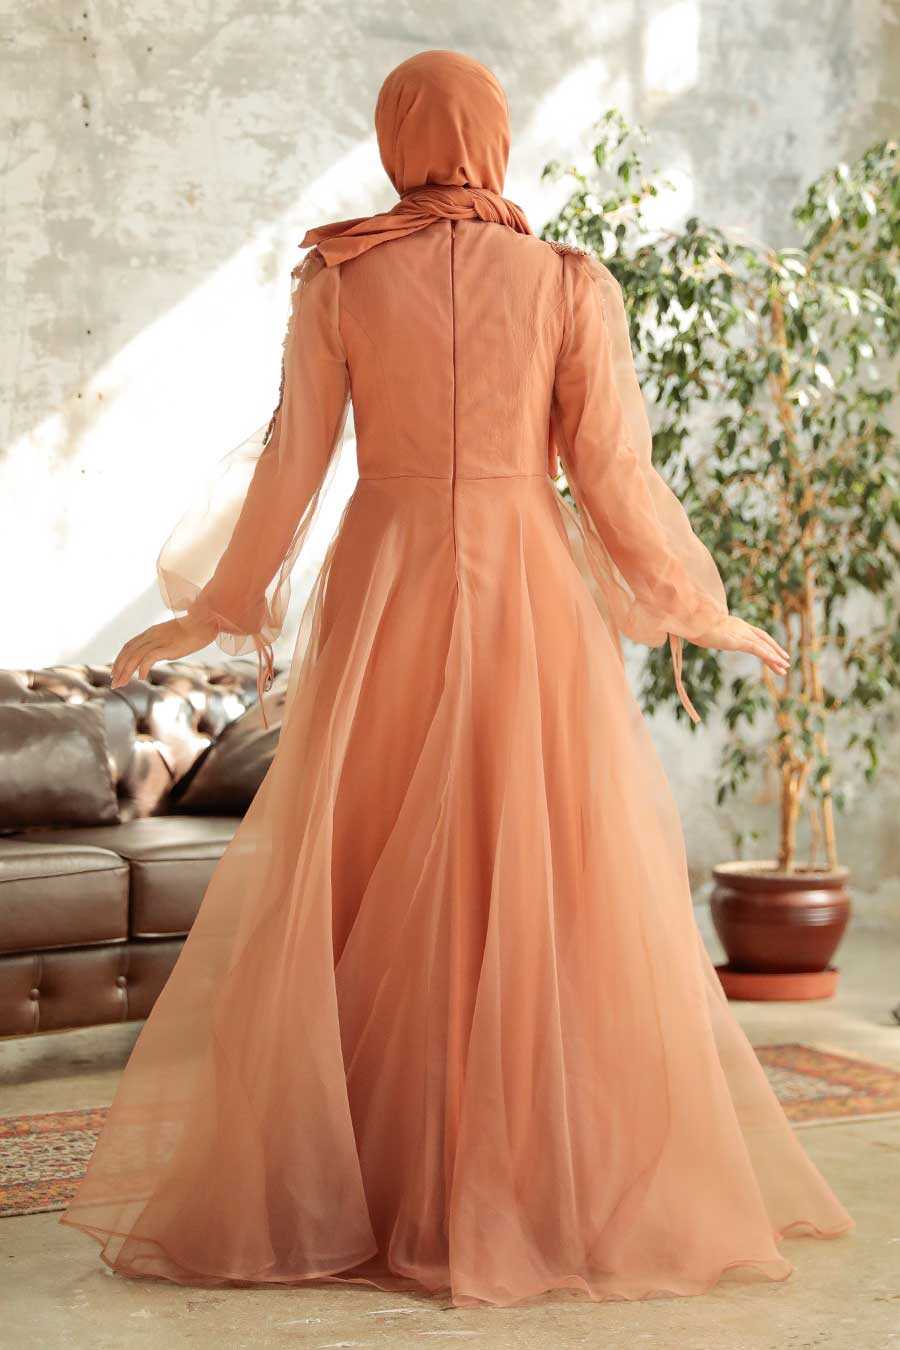 Plus Size Muslim Women Modest Hijab Dresses-Niswa Fashion